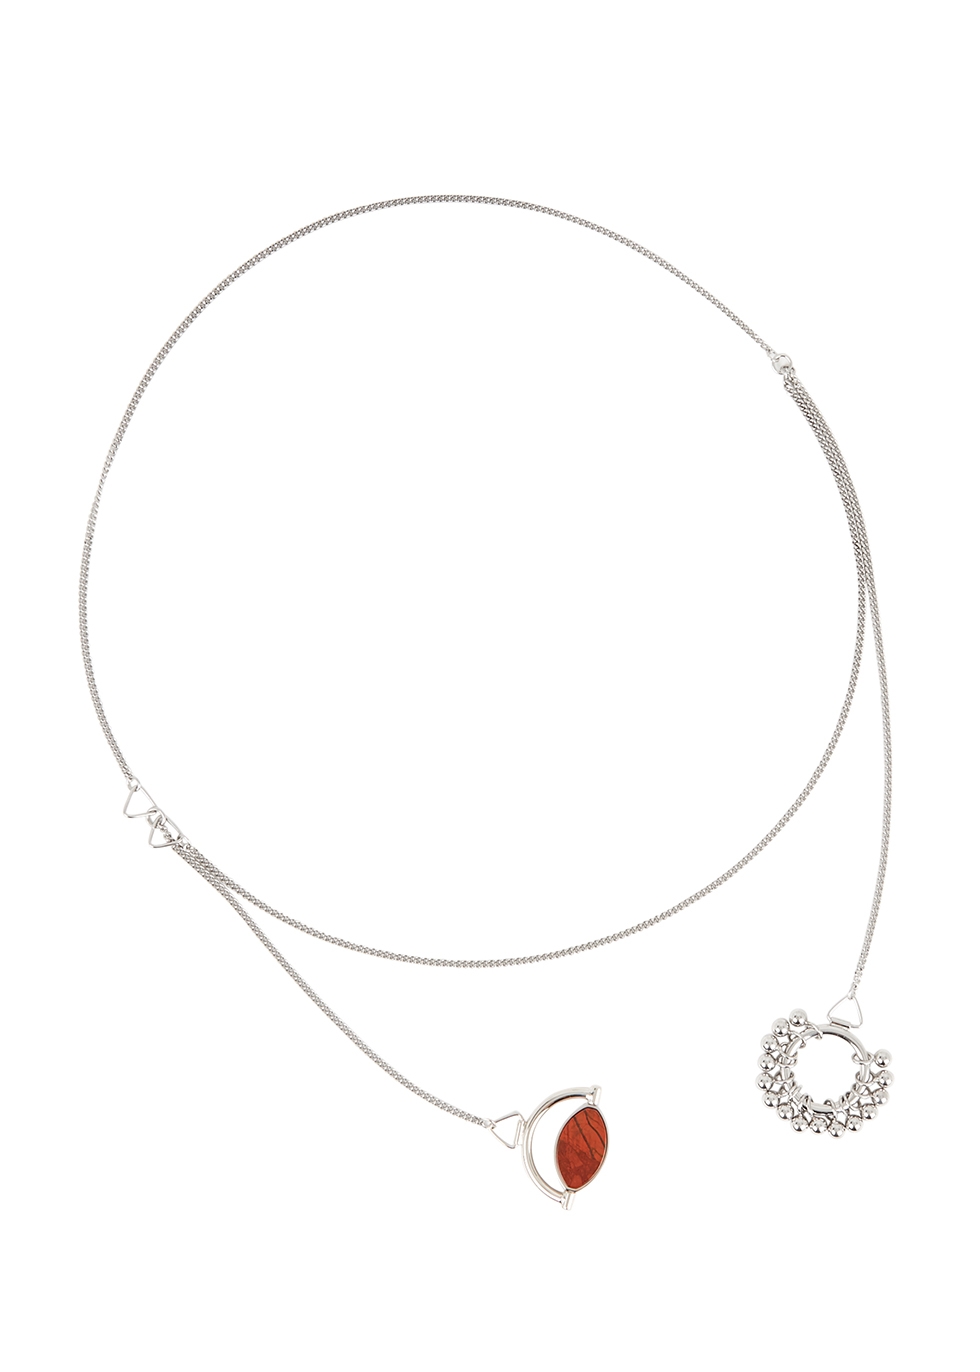 Silver-tone double pendant necklace